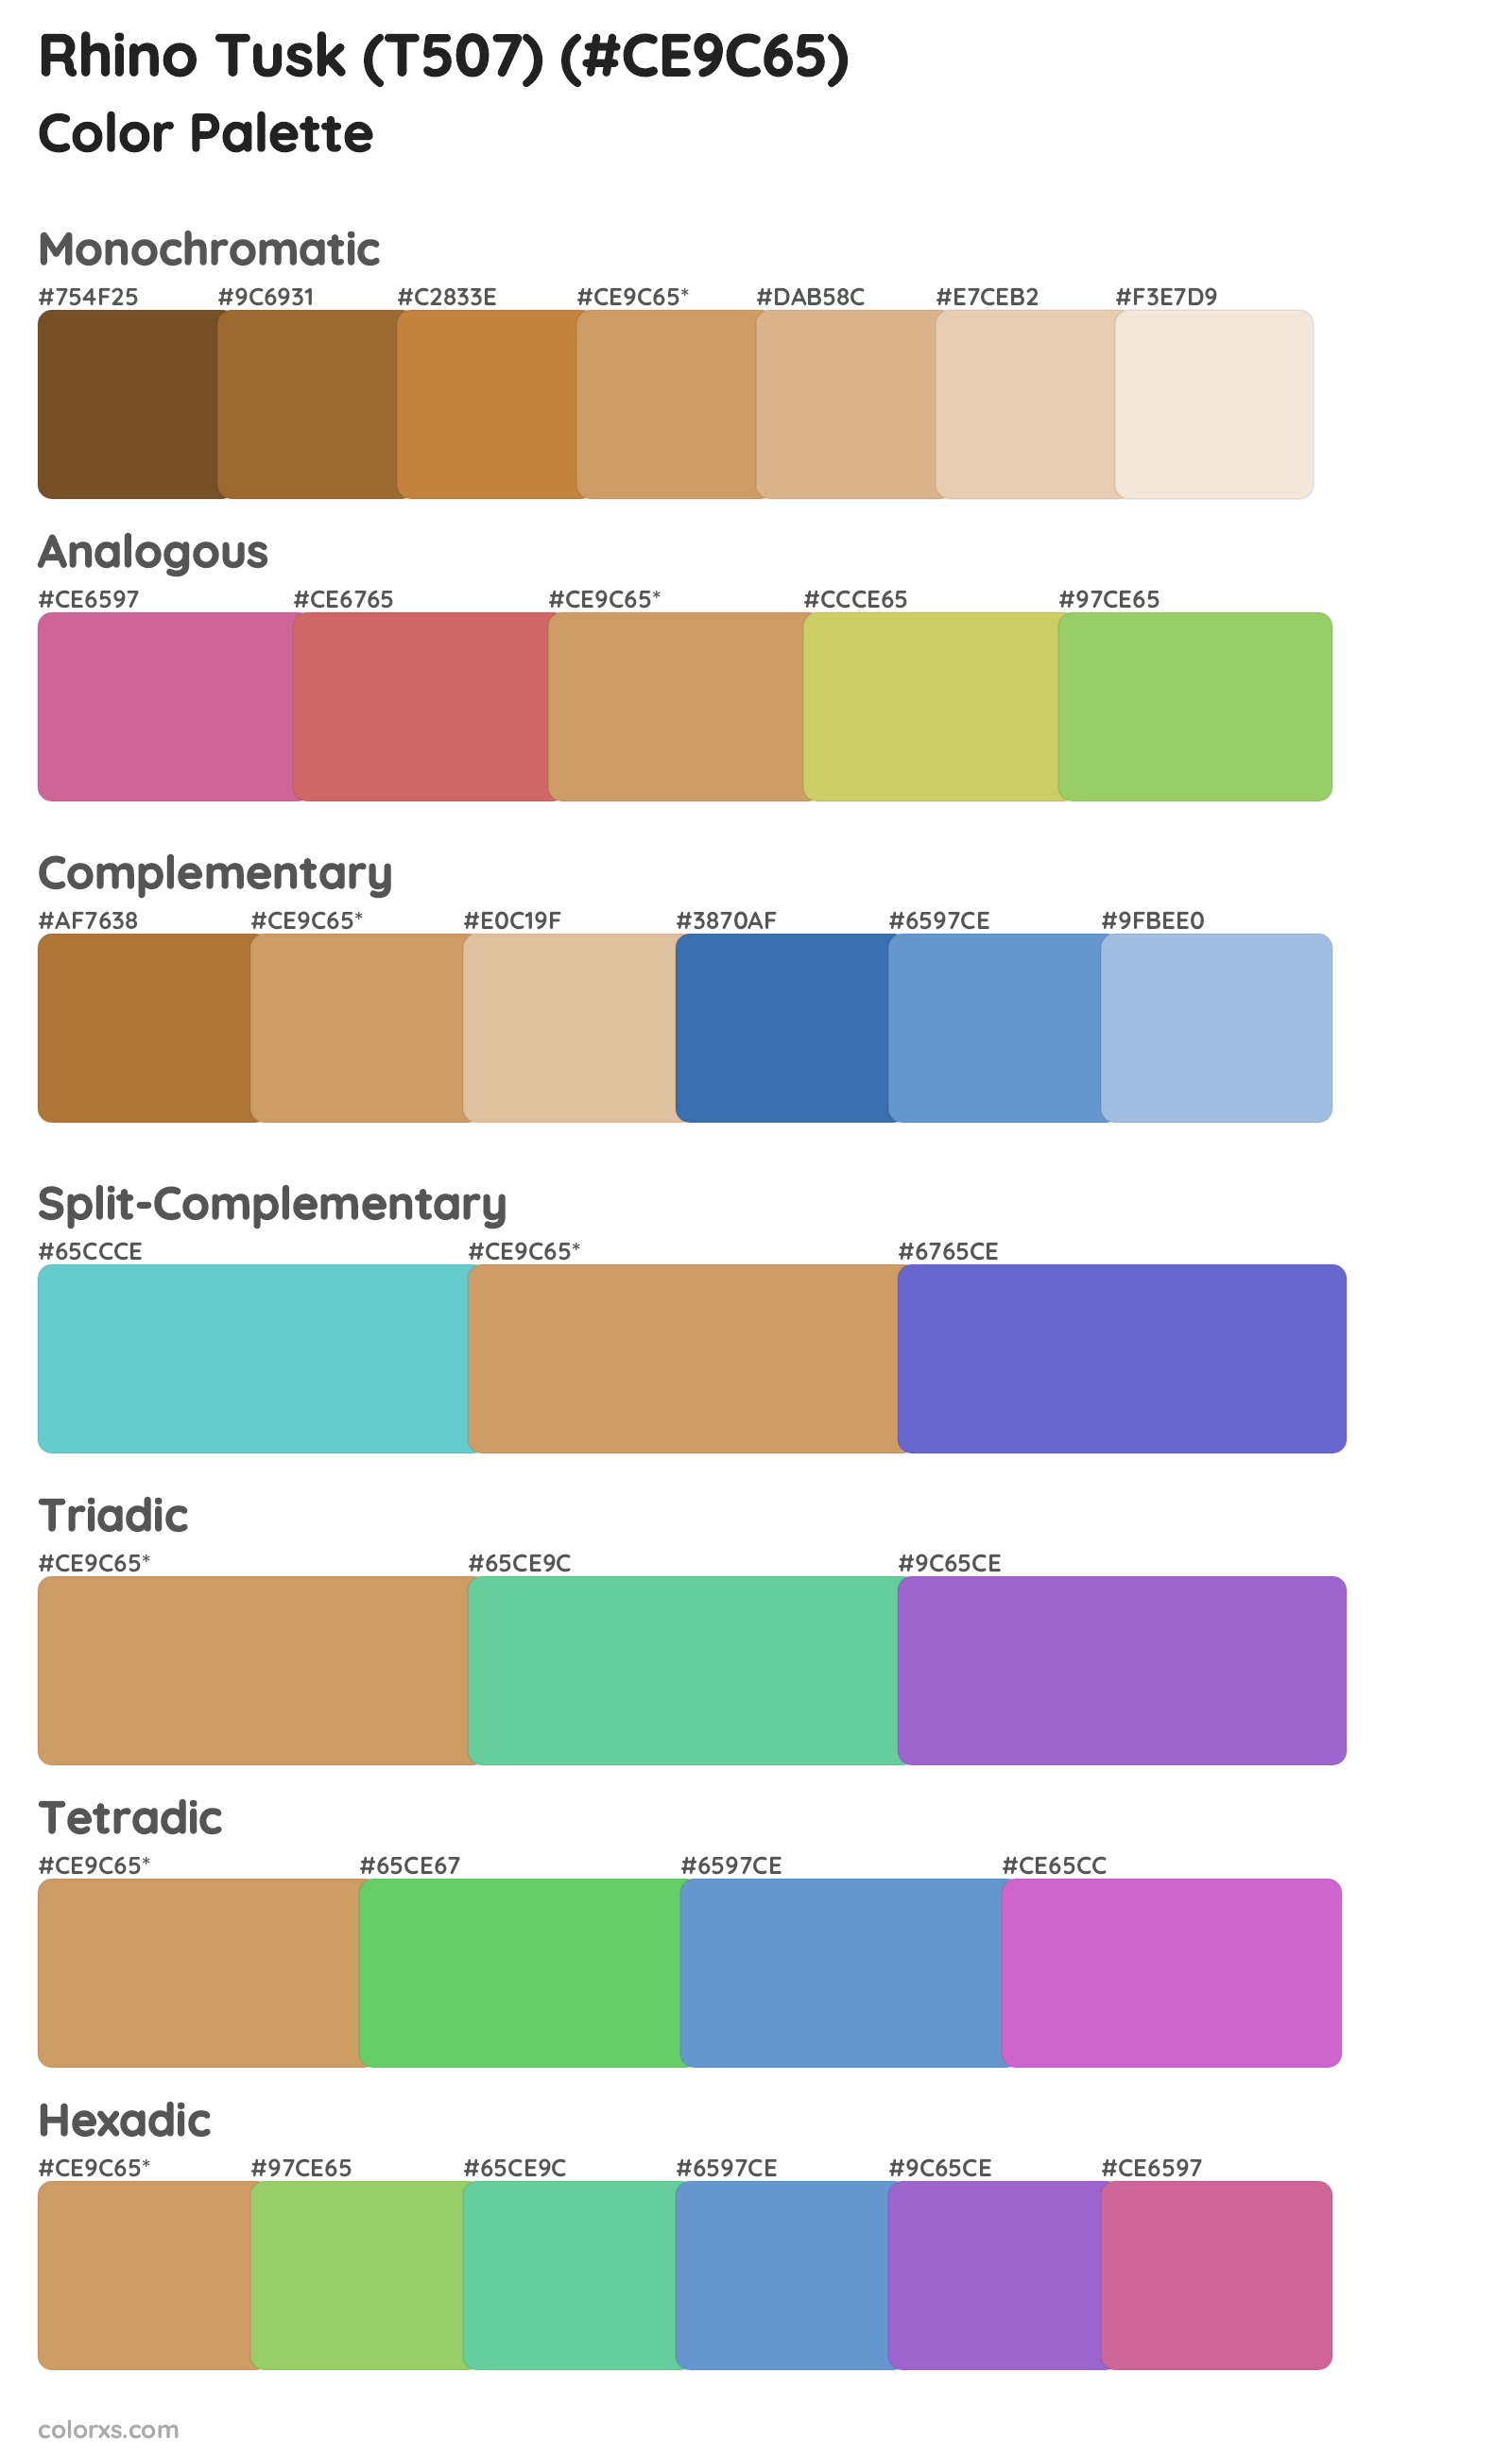 Rhino Tusk (T507) Color Scheme Palettes